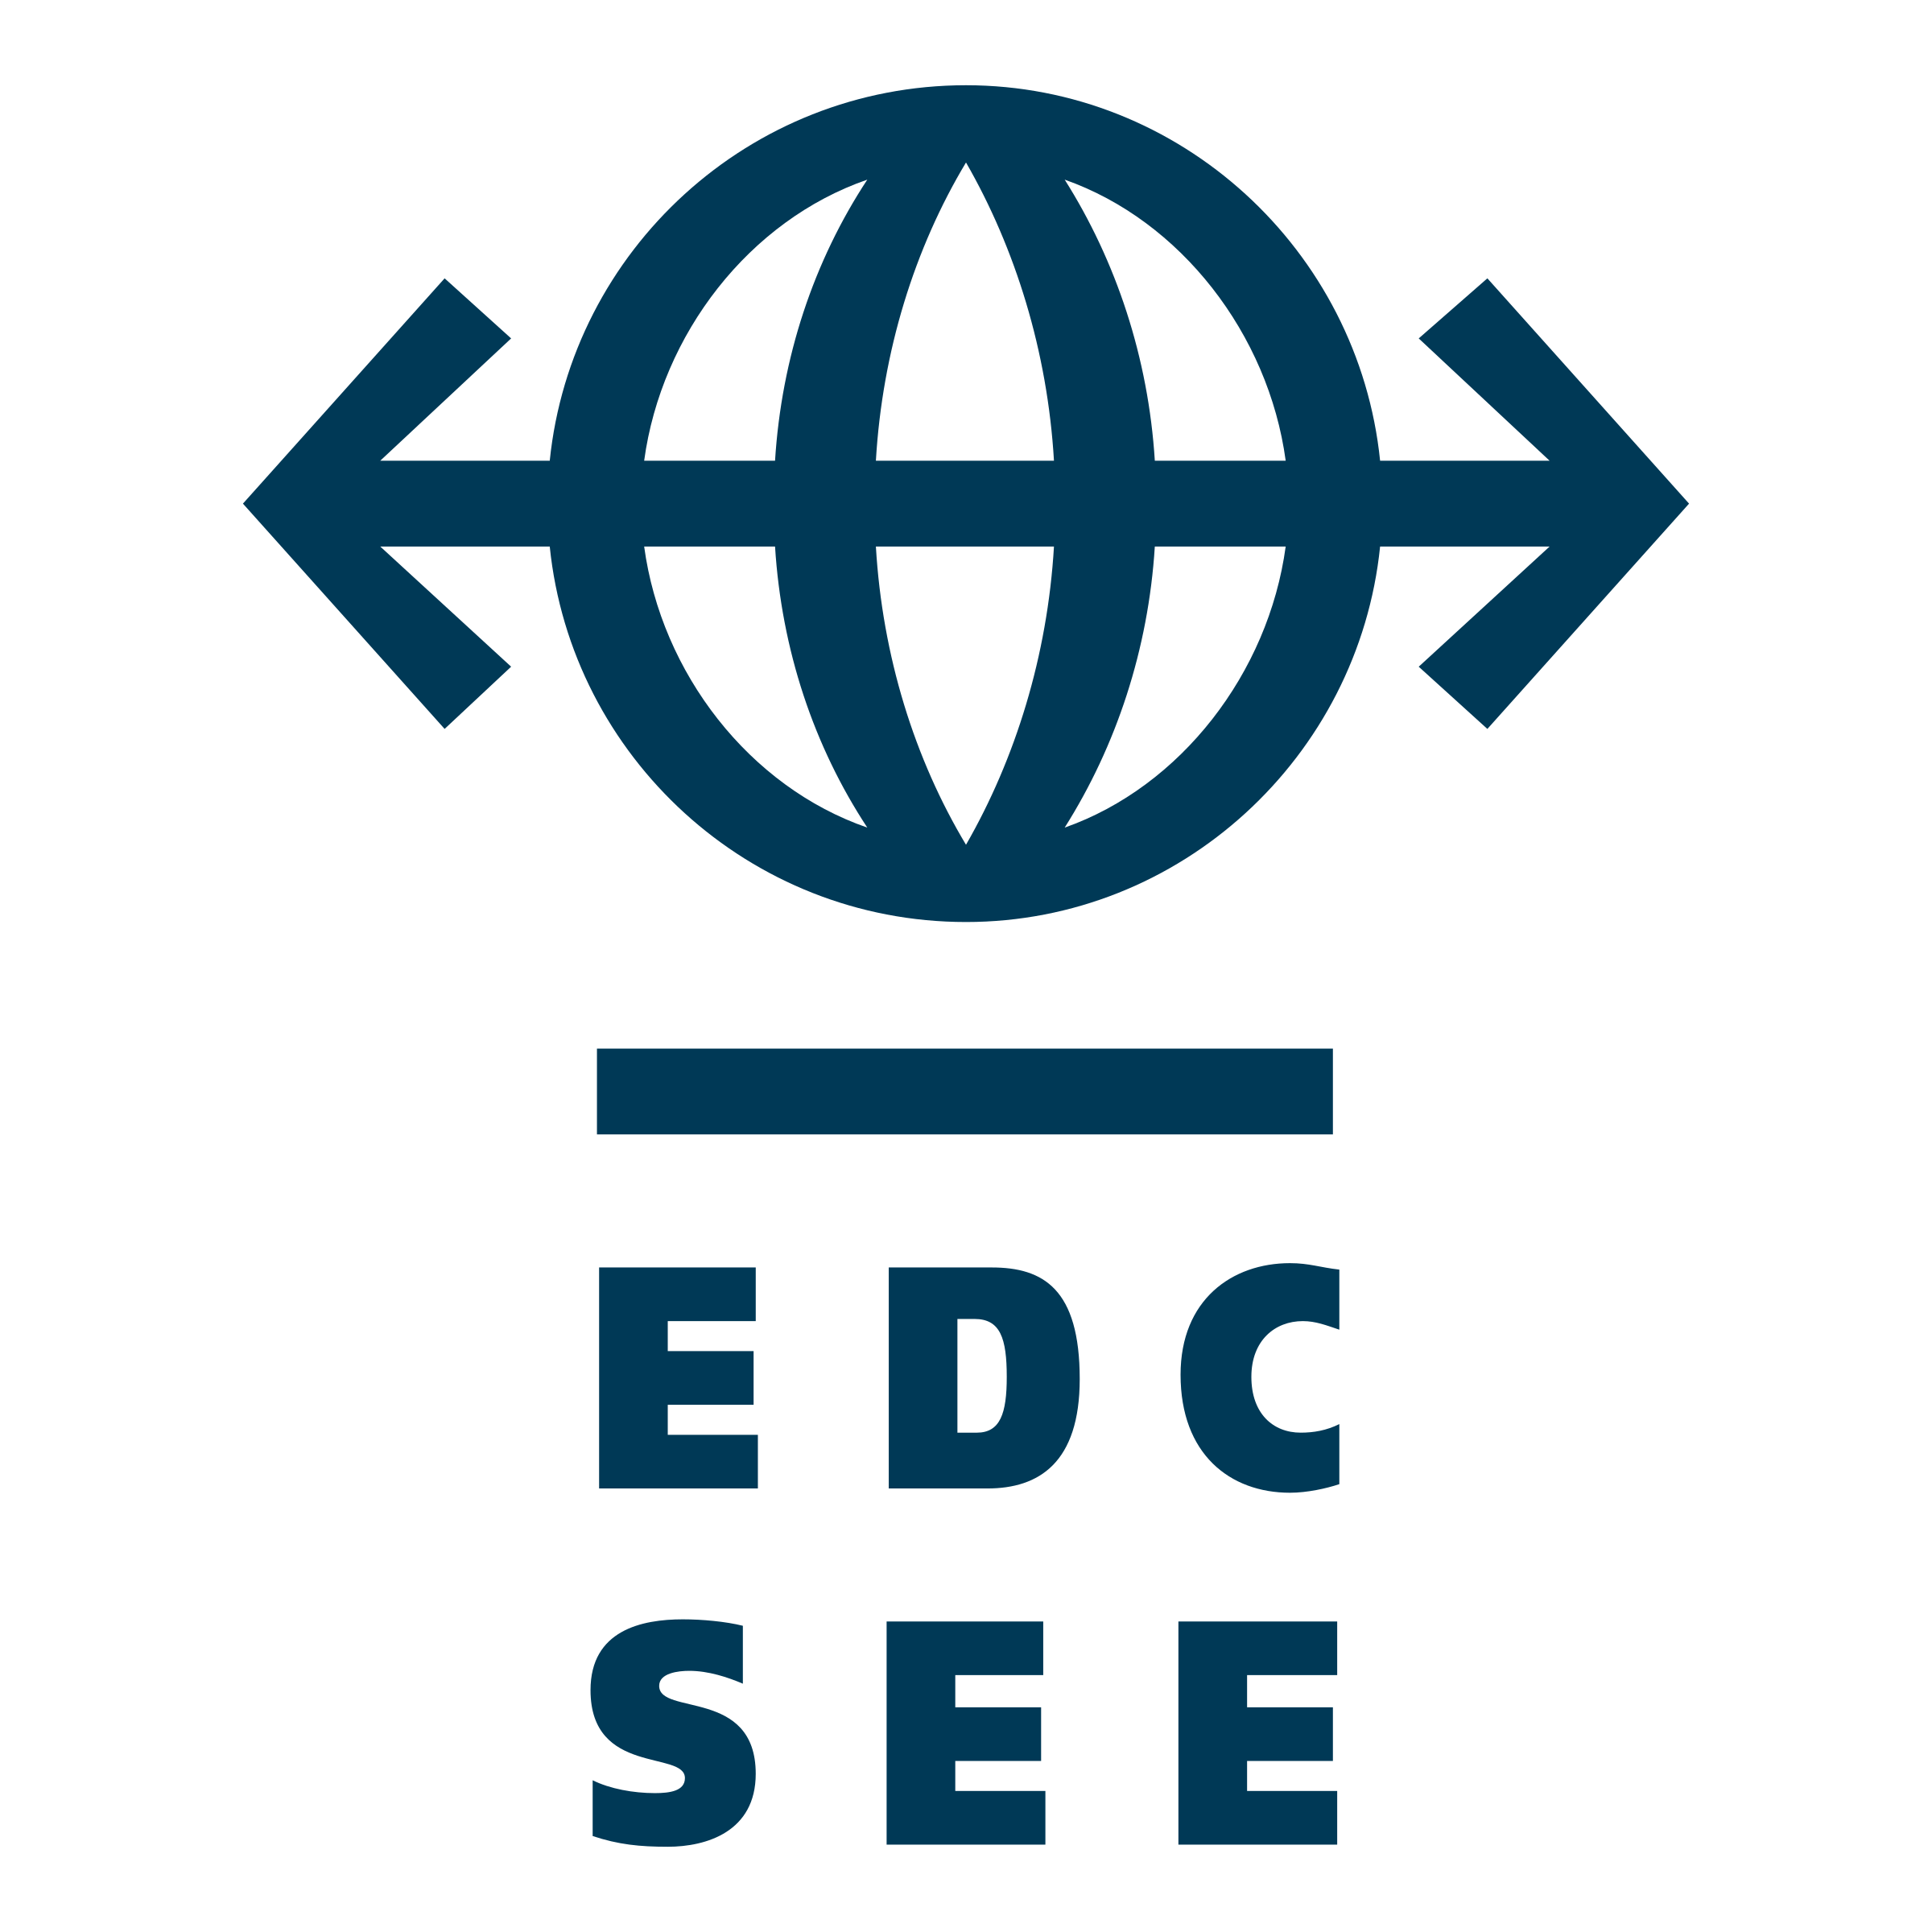 EDC SEE Logo PNG Transparent & SVG Vector.